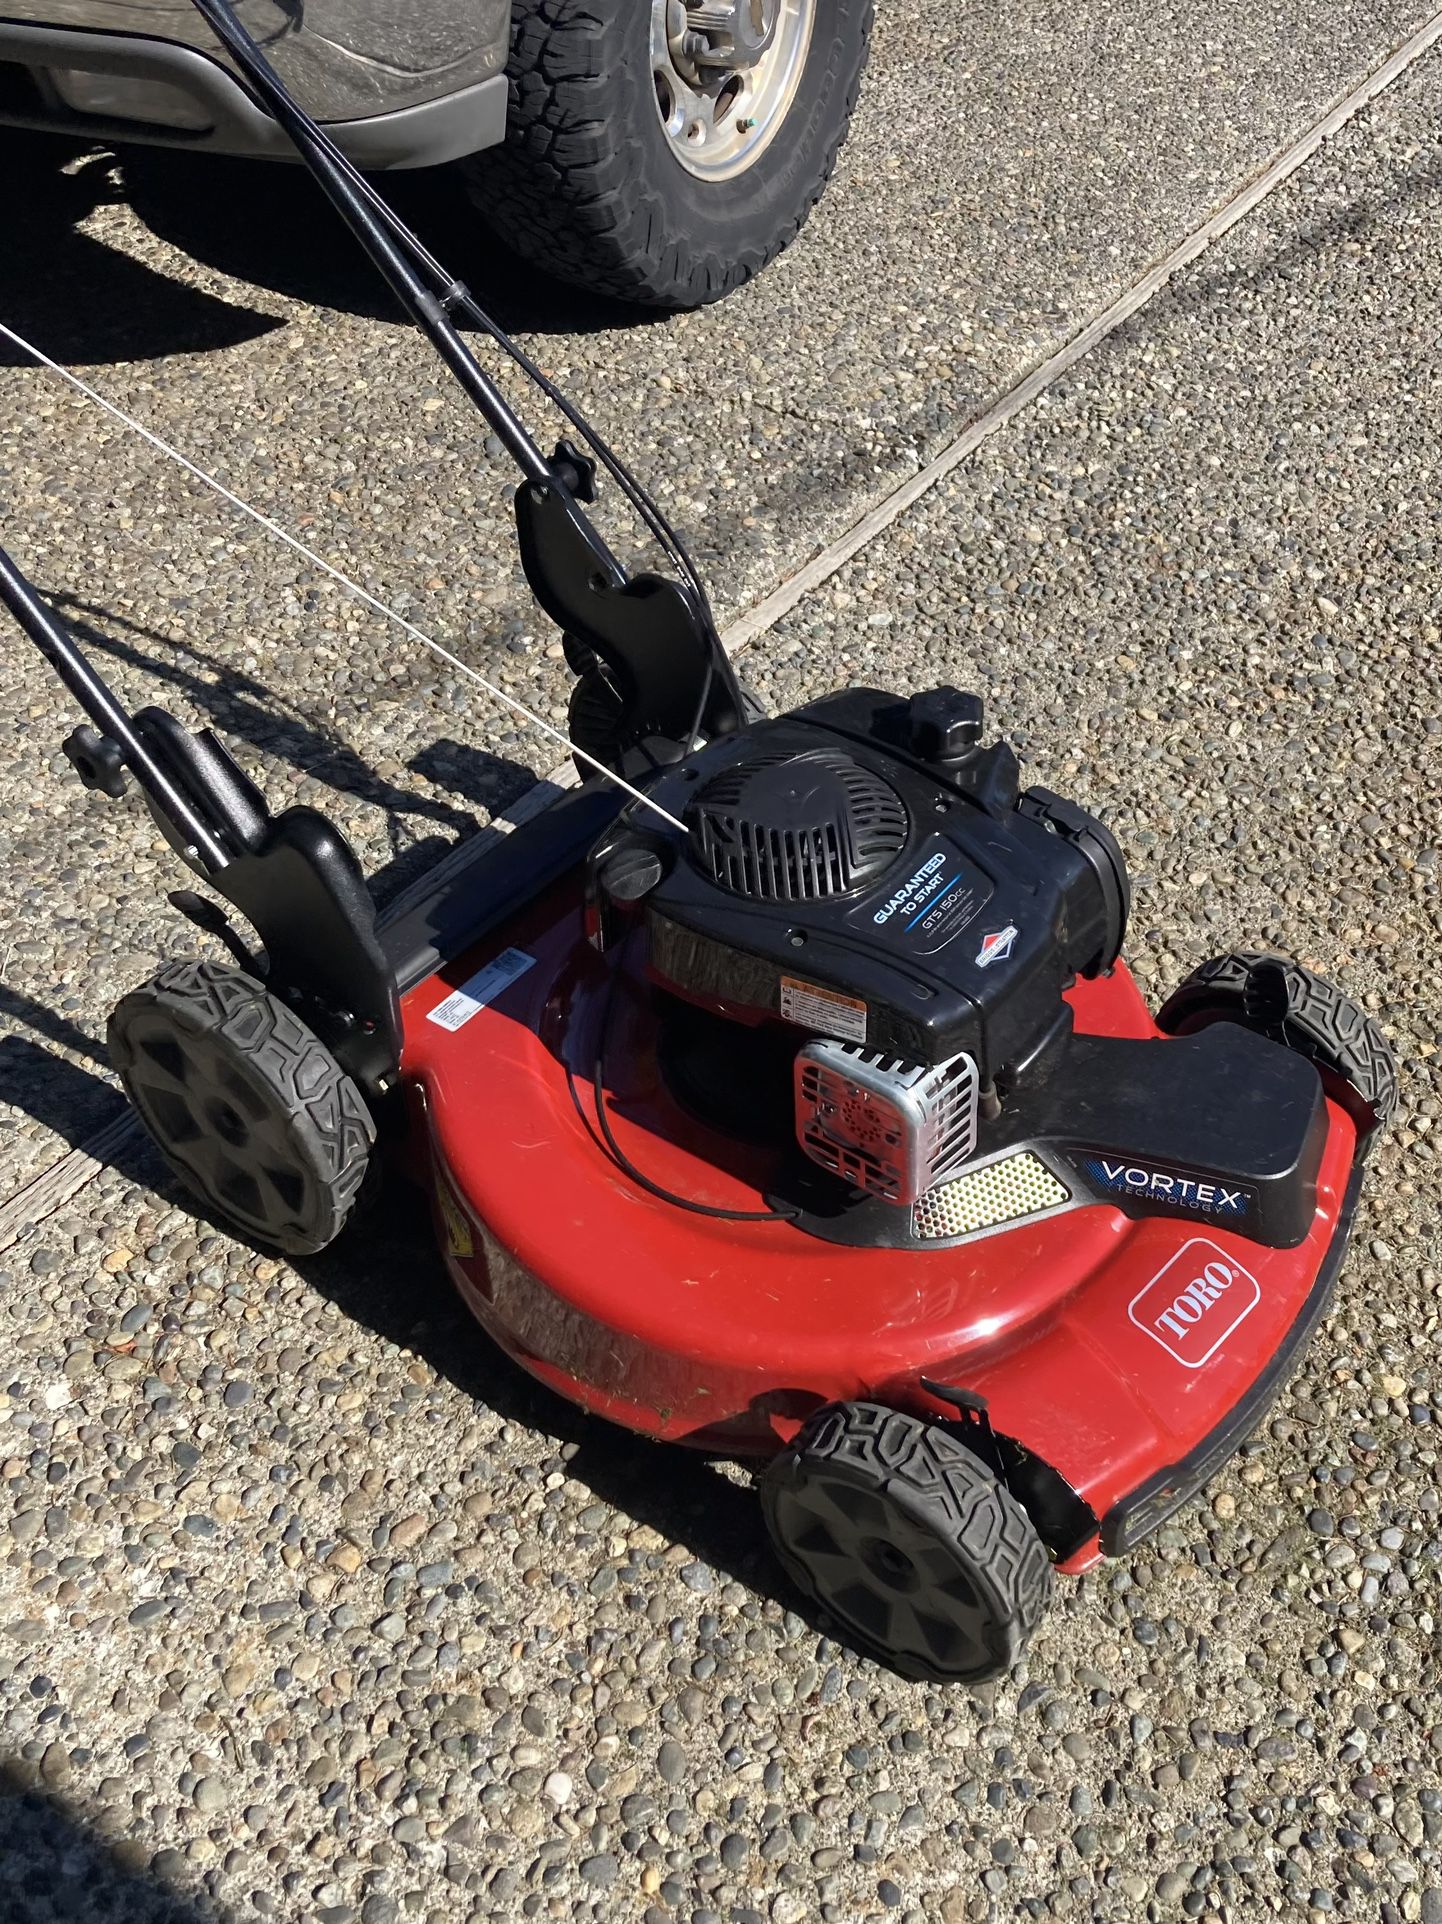 Toro Recycler Self-Propelled Lawn Mower